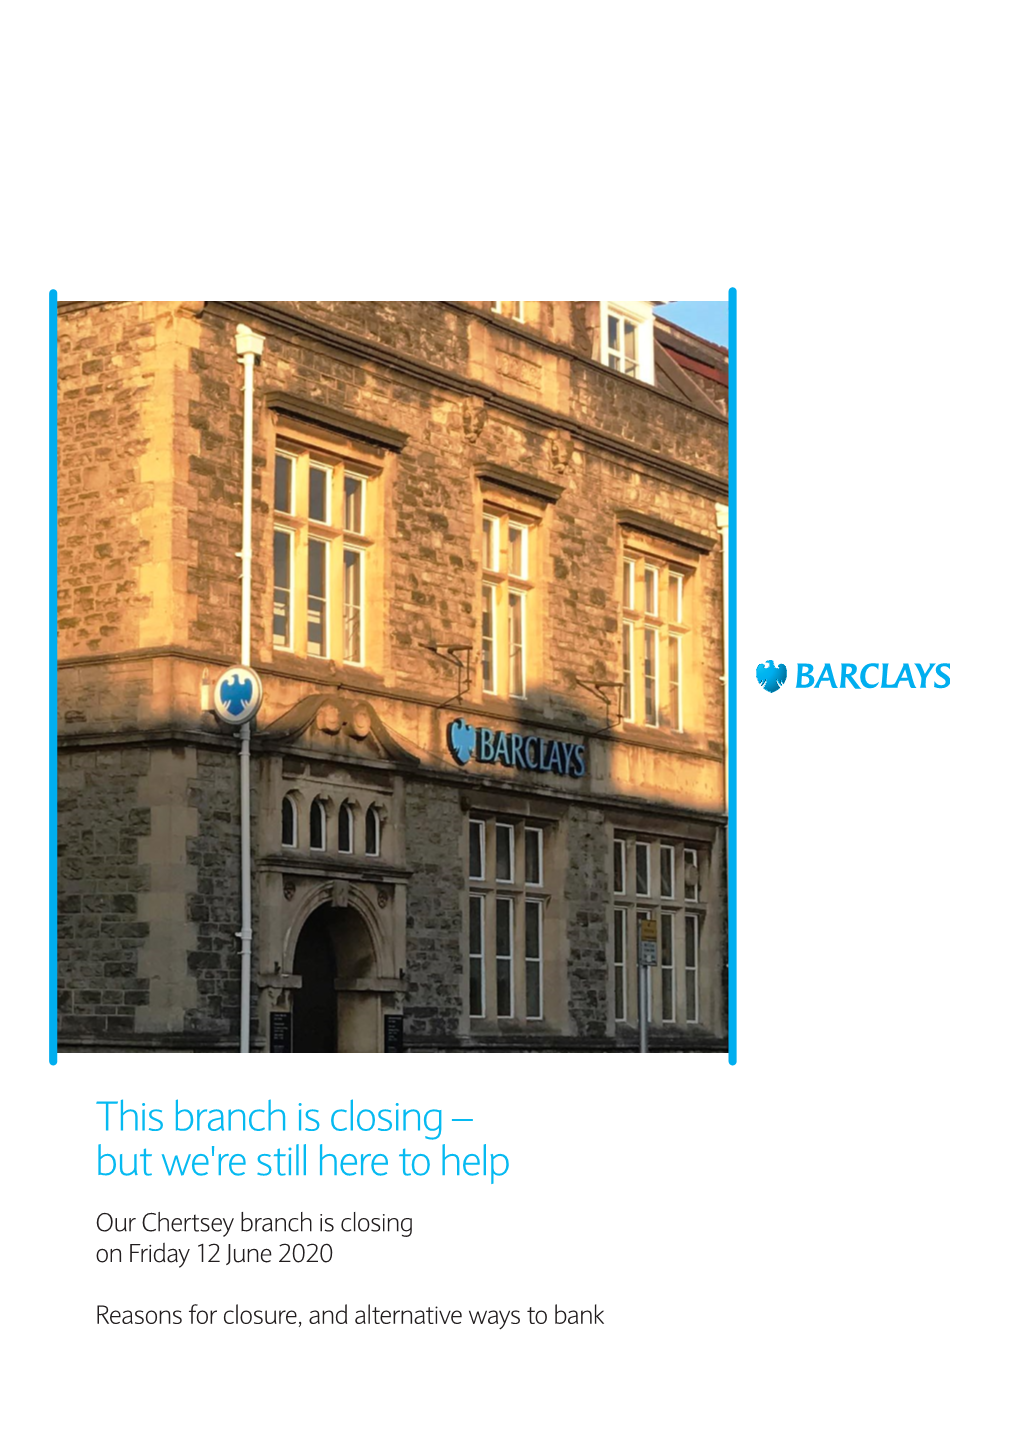 Chertsey Branch Is Closing on Friday 12 June 2020